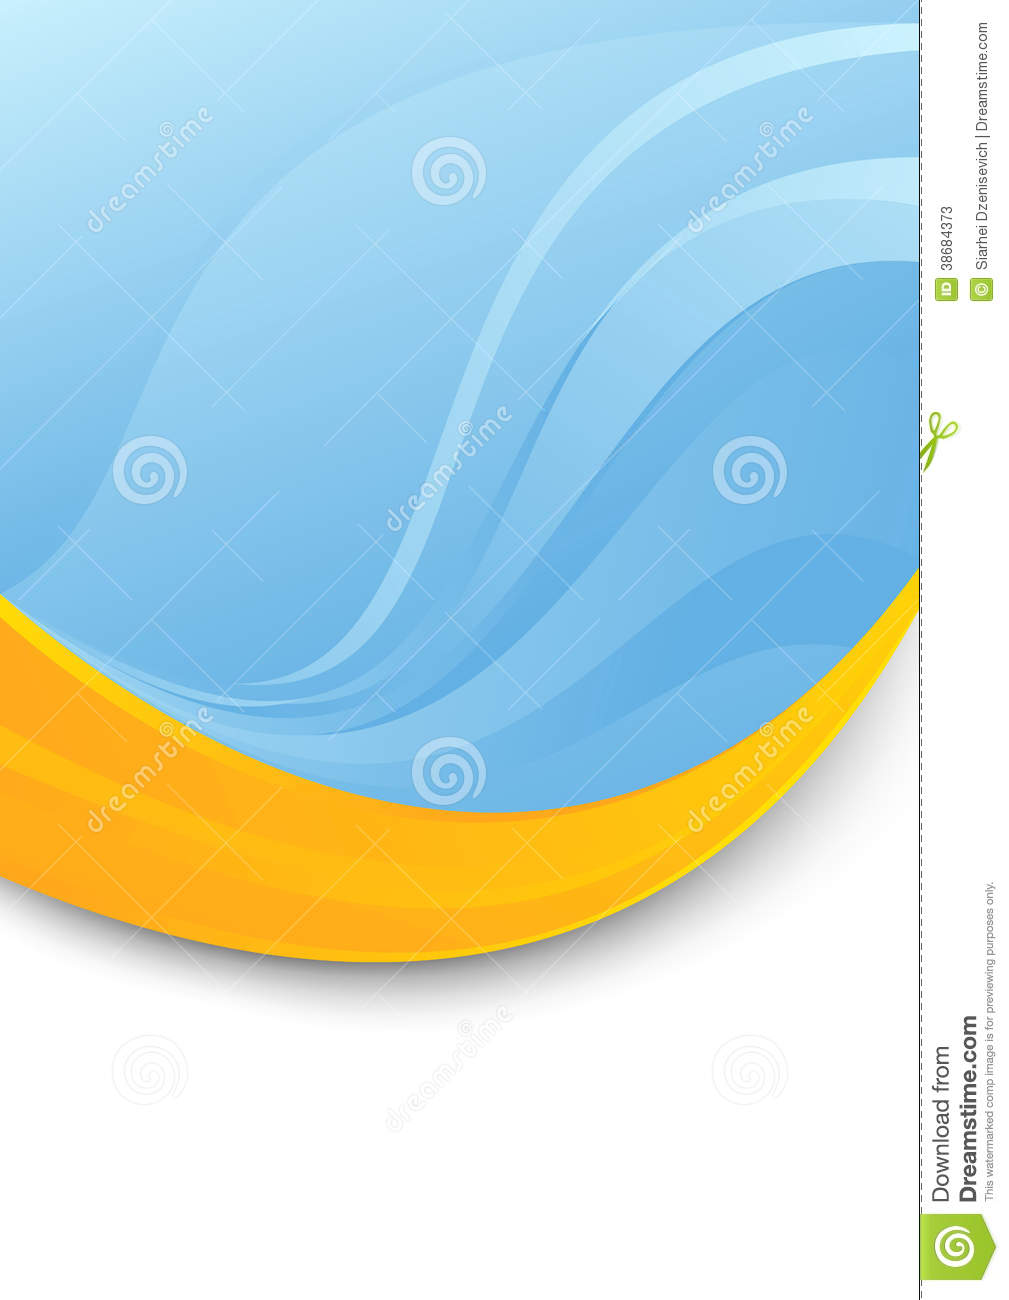 Blue Folder Template   Orange Swoosh Stock Photos   Image  38684373